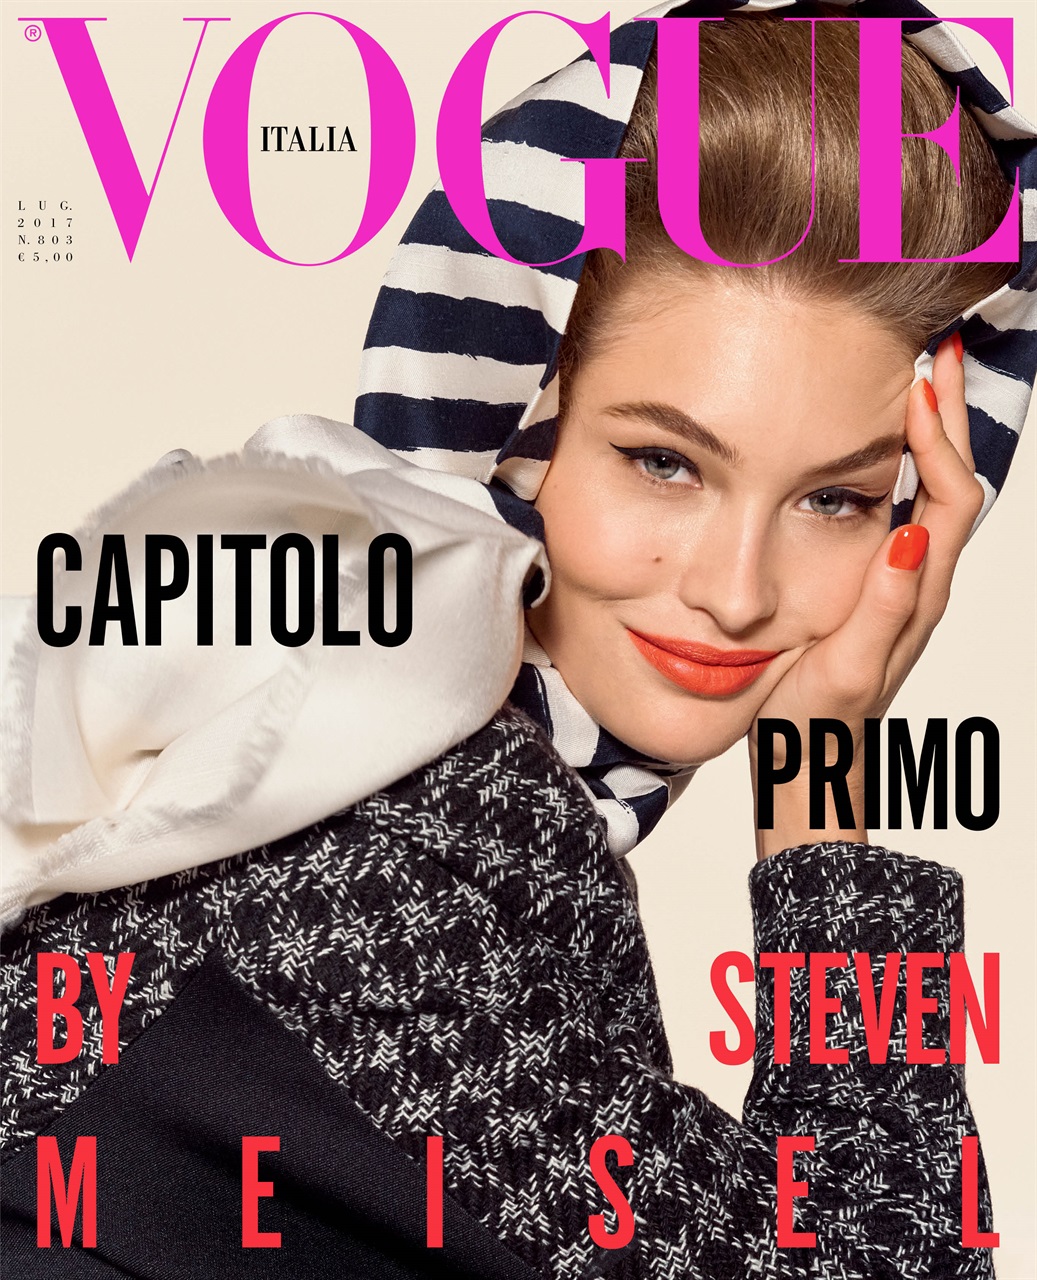 Vogue-italia-july-2017-cover-b.jpg